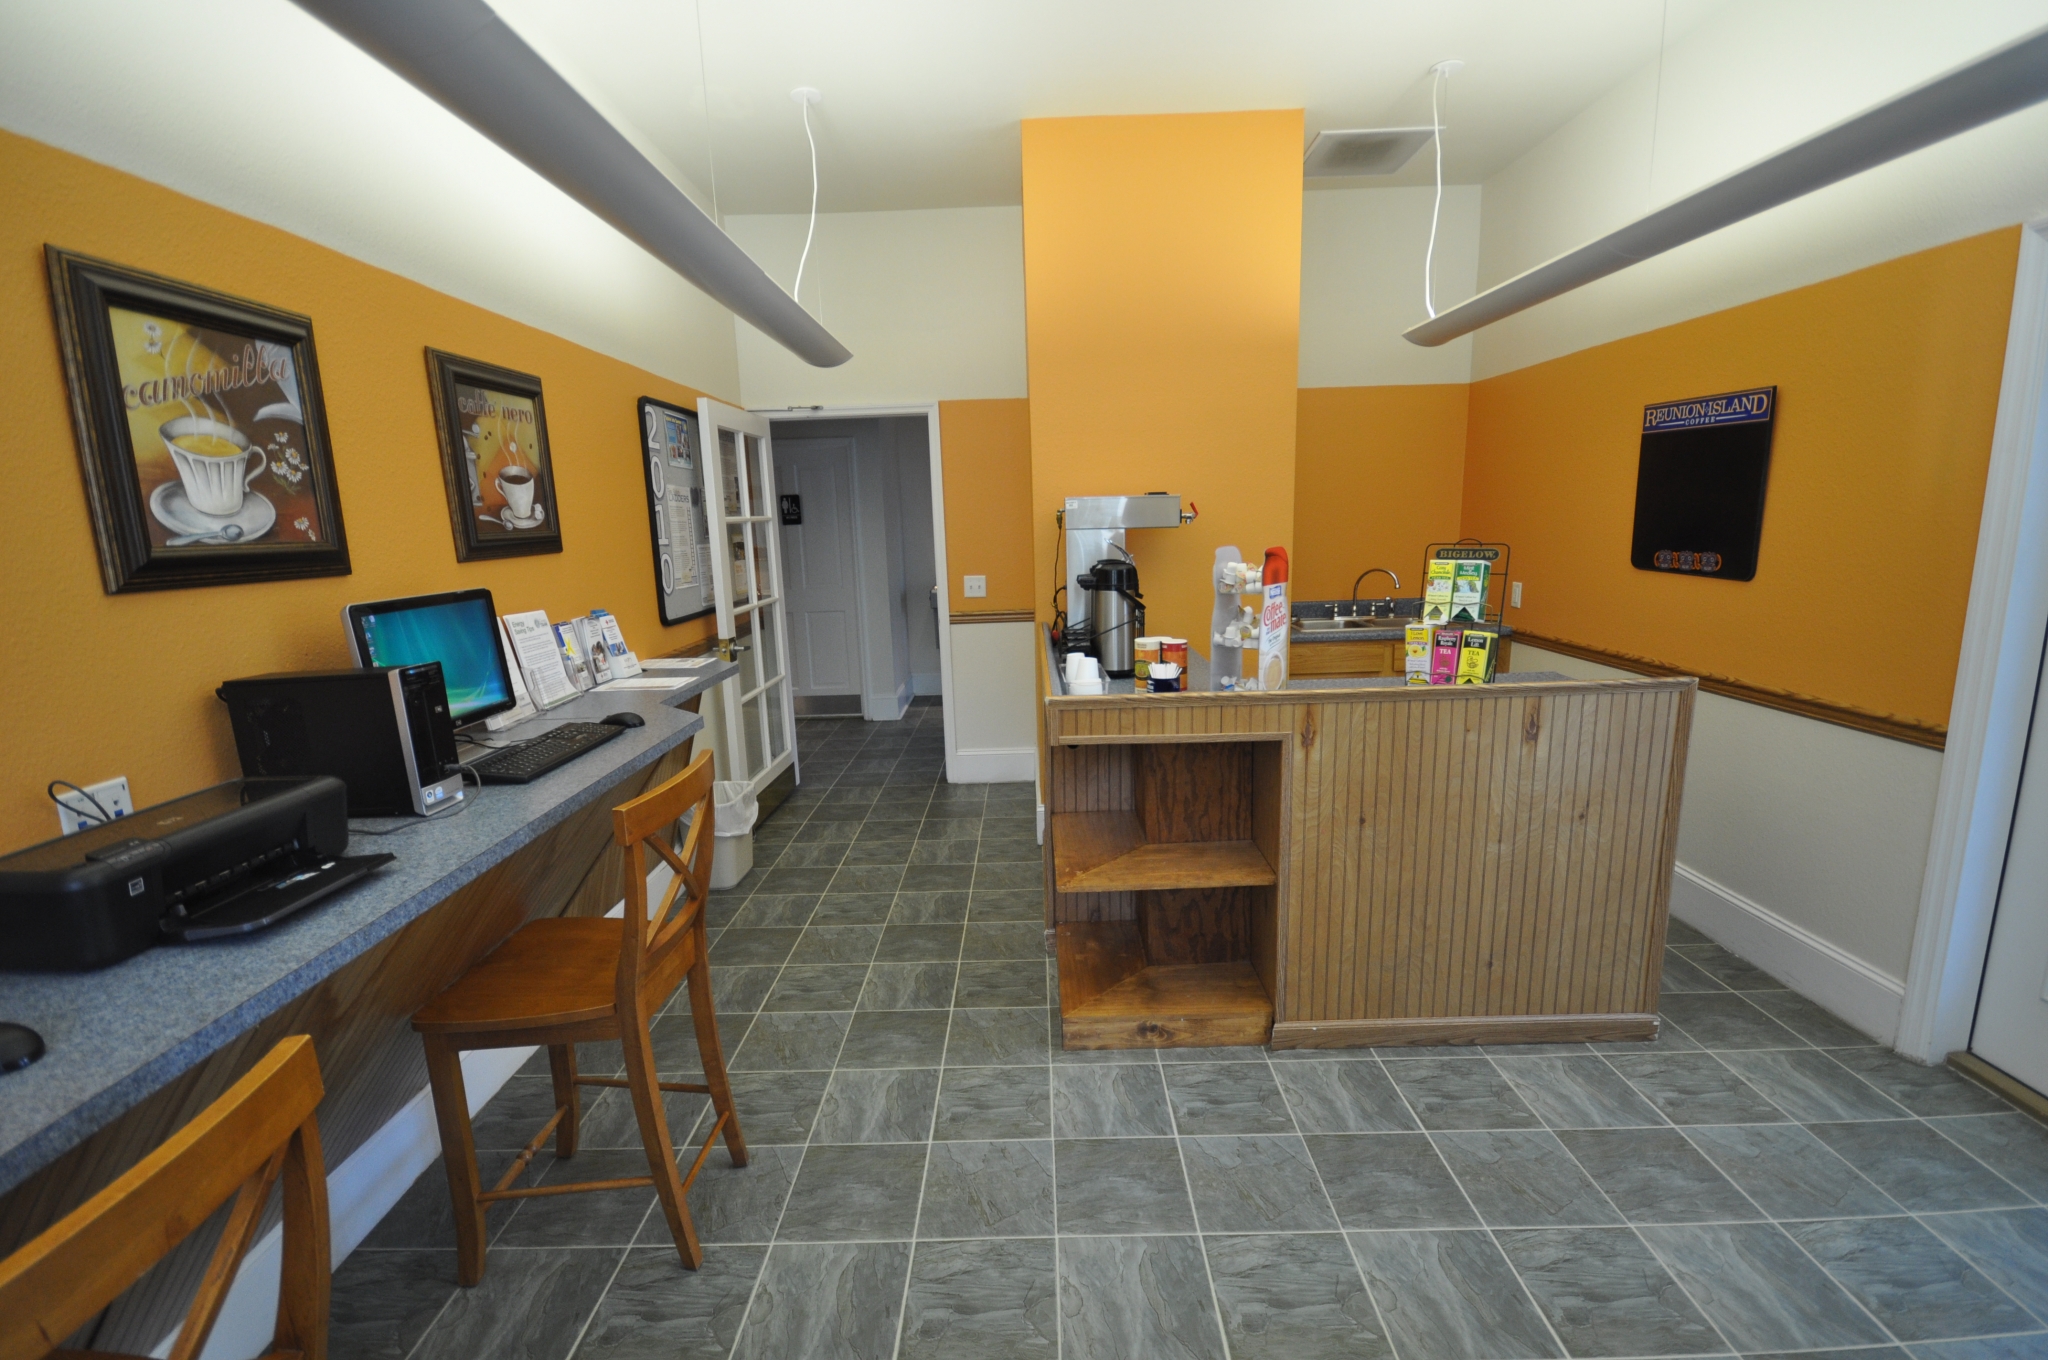 Laurel Bay Business Center | Community Business Center | Office Center for Residents in Beaufort SC